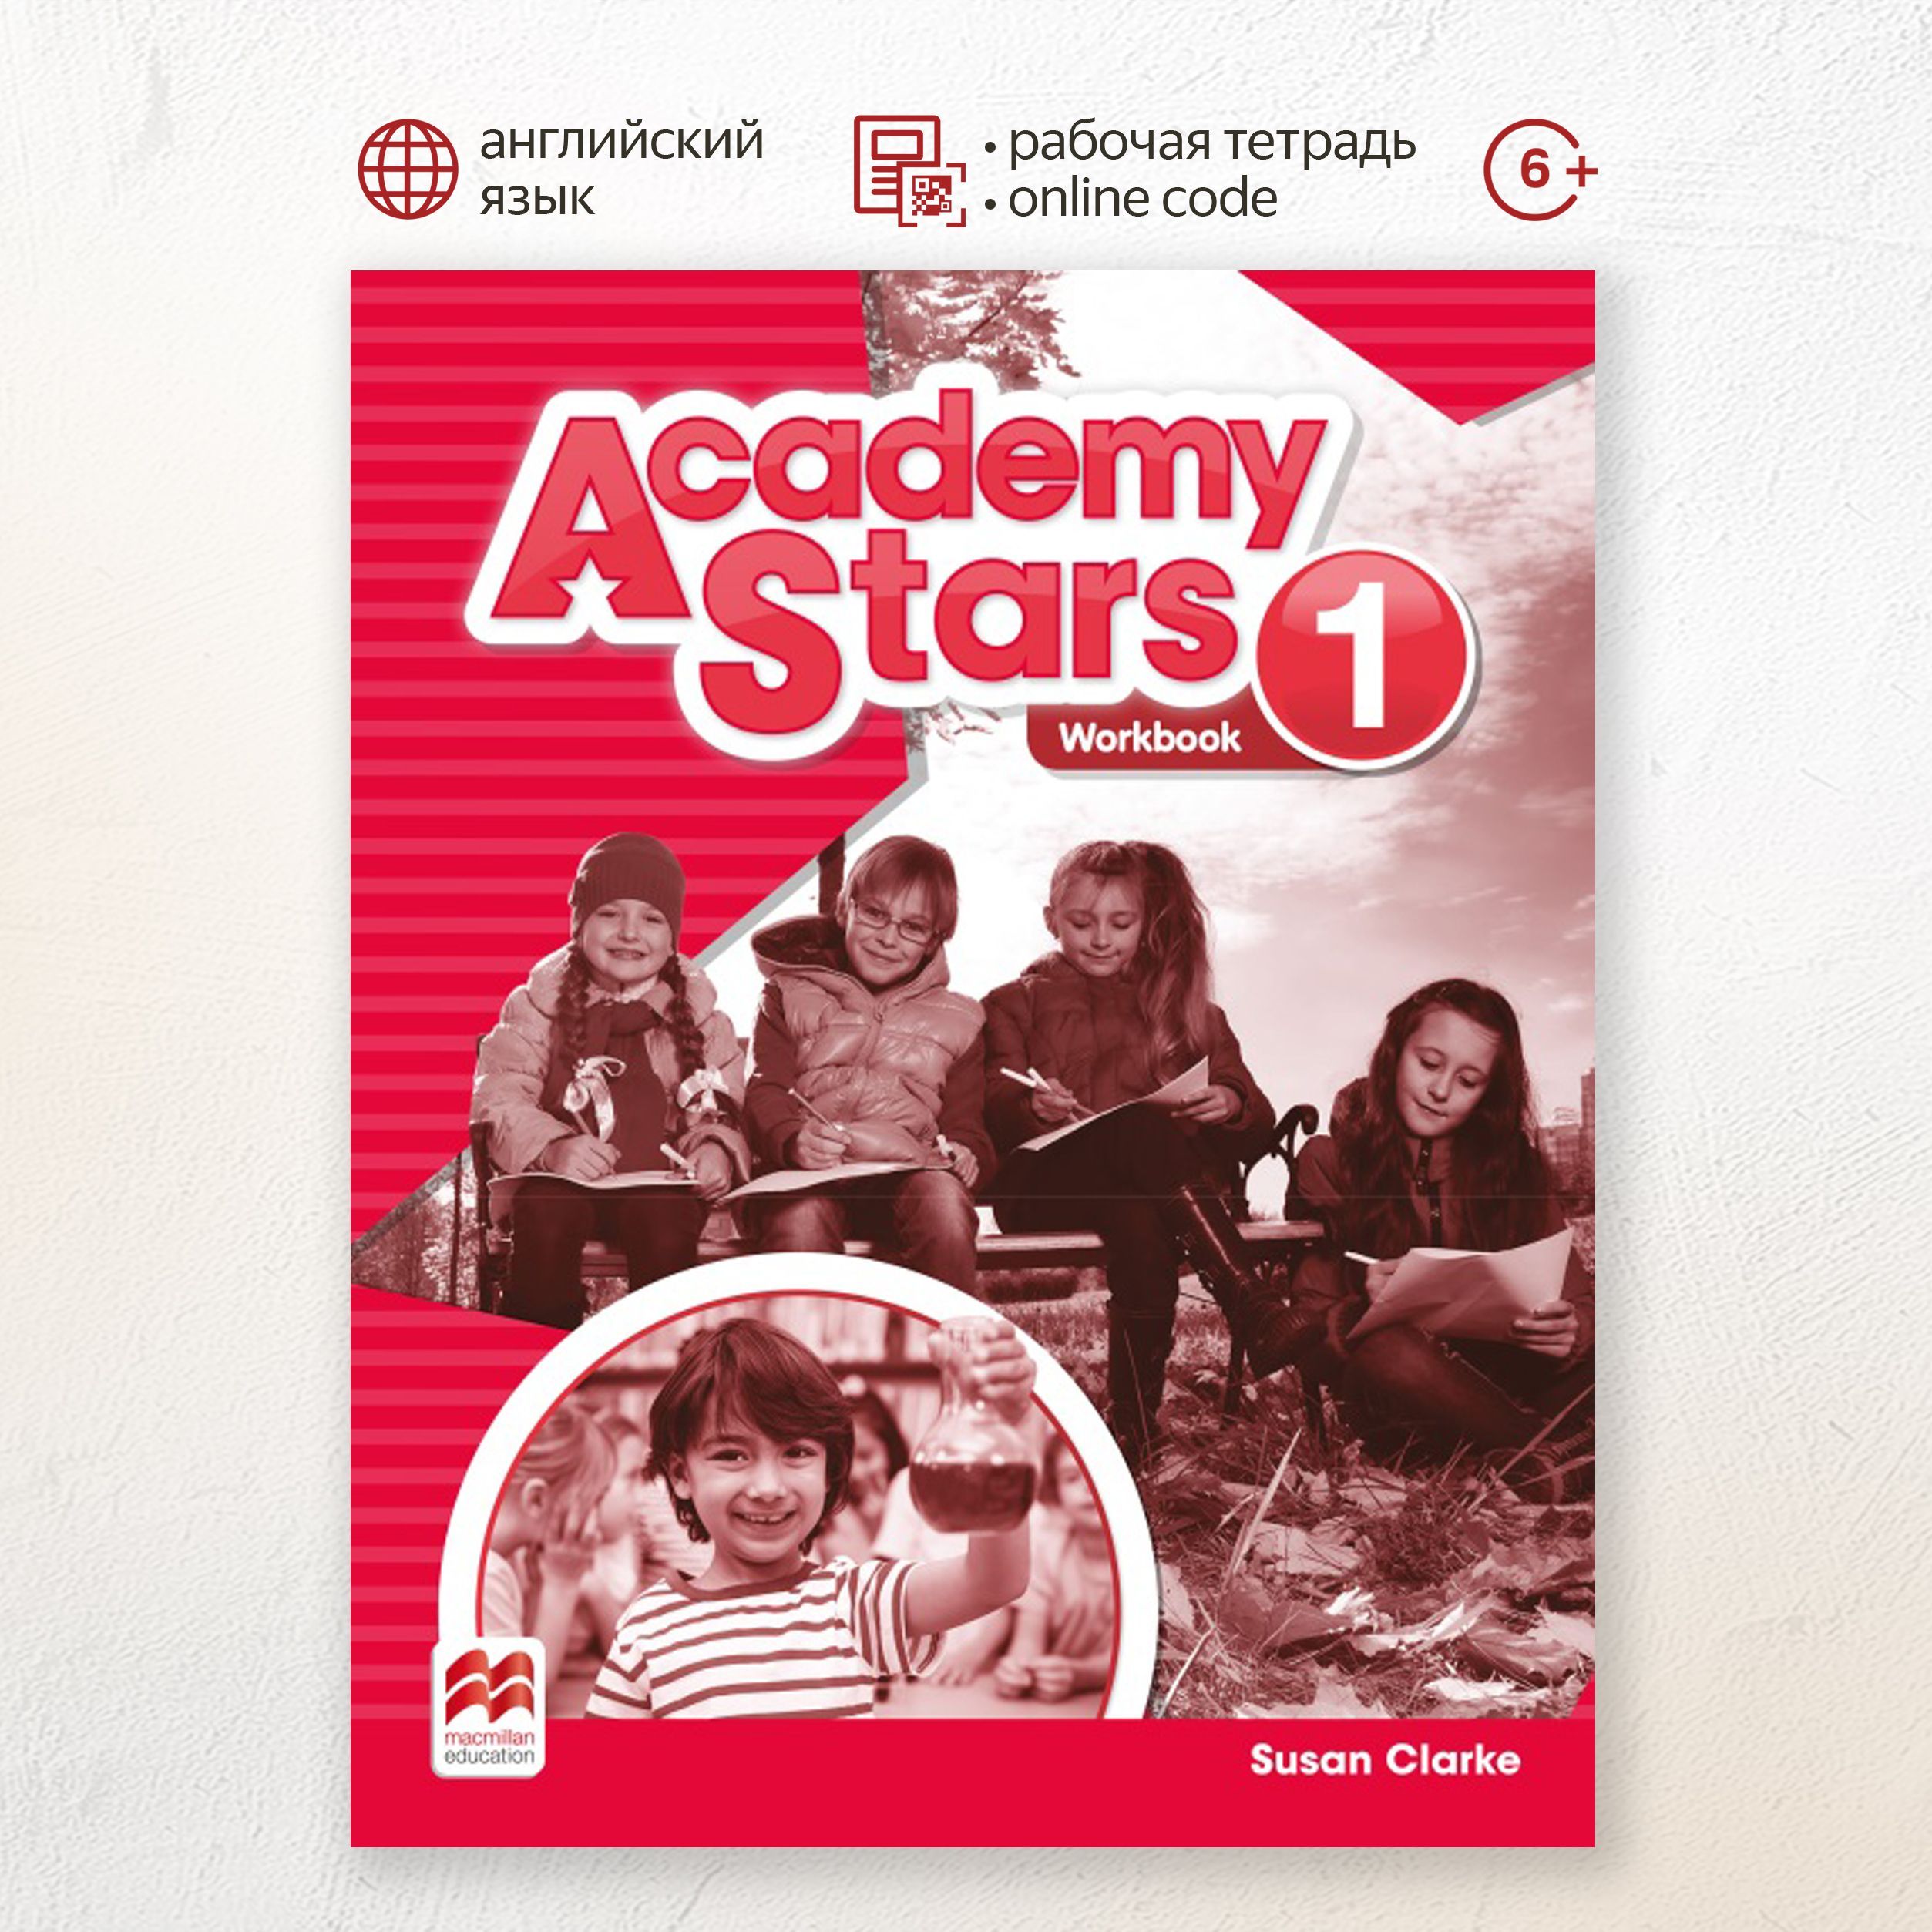 Academy stars 1 unit 8. Academy Stars Starter Workbook. Ключи к Academy Stars 1 Workbook. Academy Stars 1 Workbook стр57.